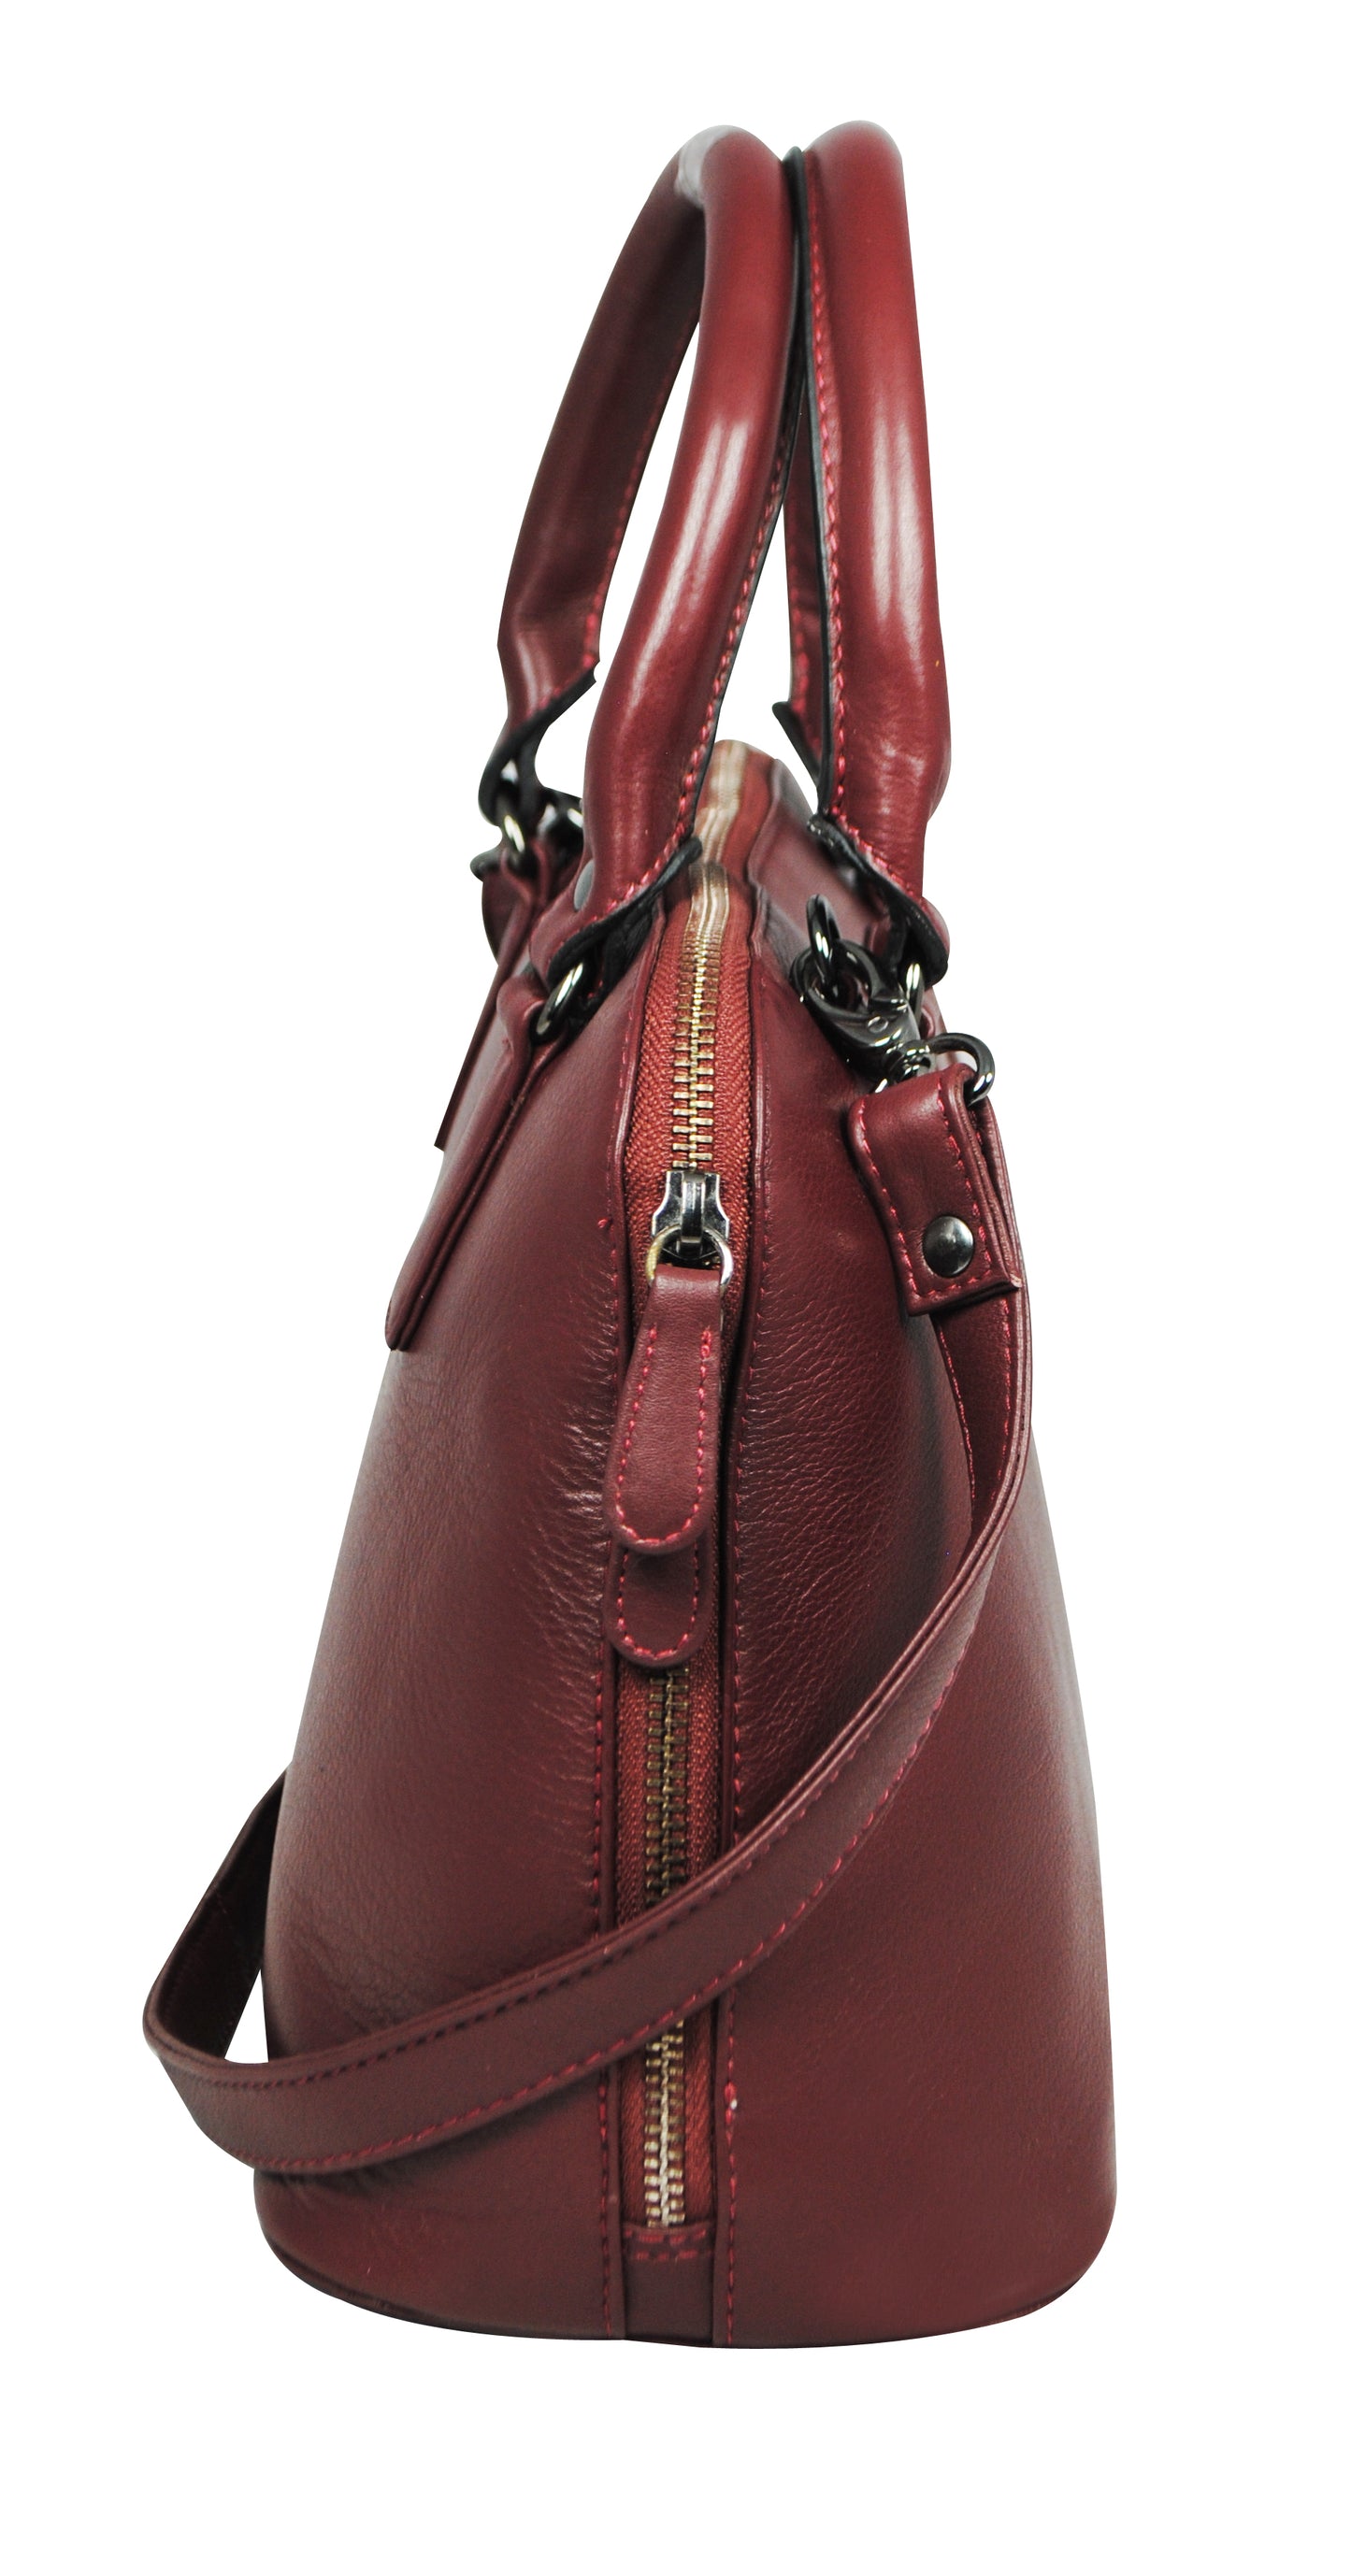 Copy of Calfnero Women's Genuine Leather Hand Bag (CON-2-Brodo)